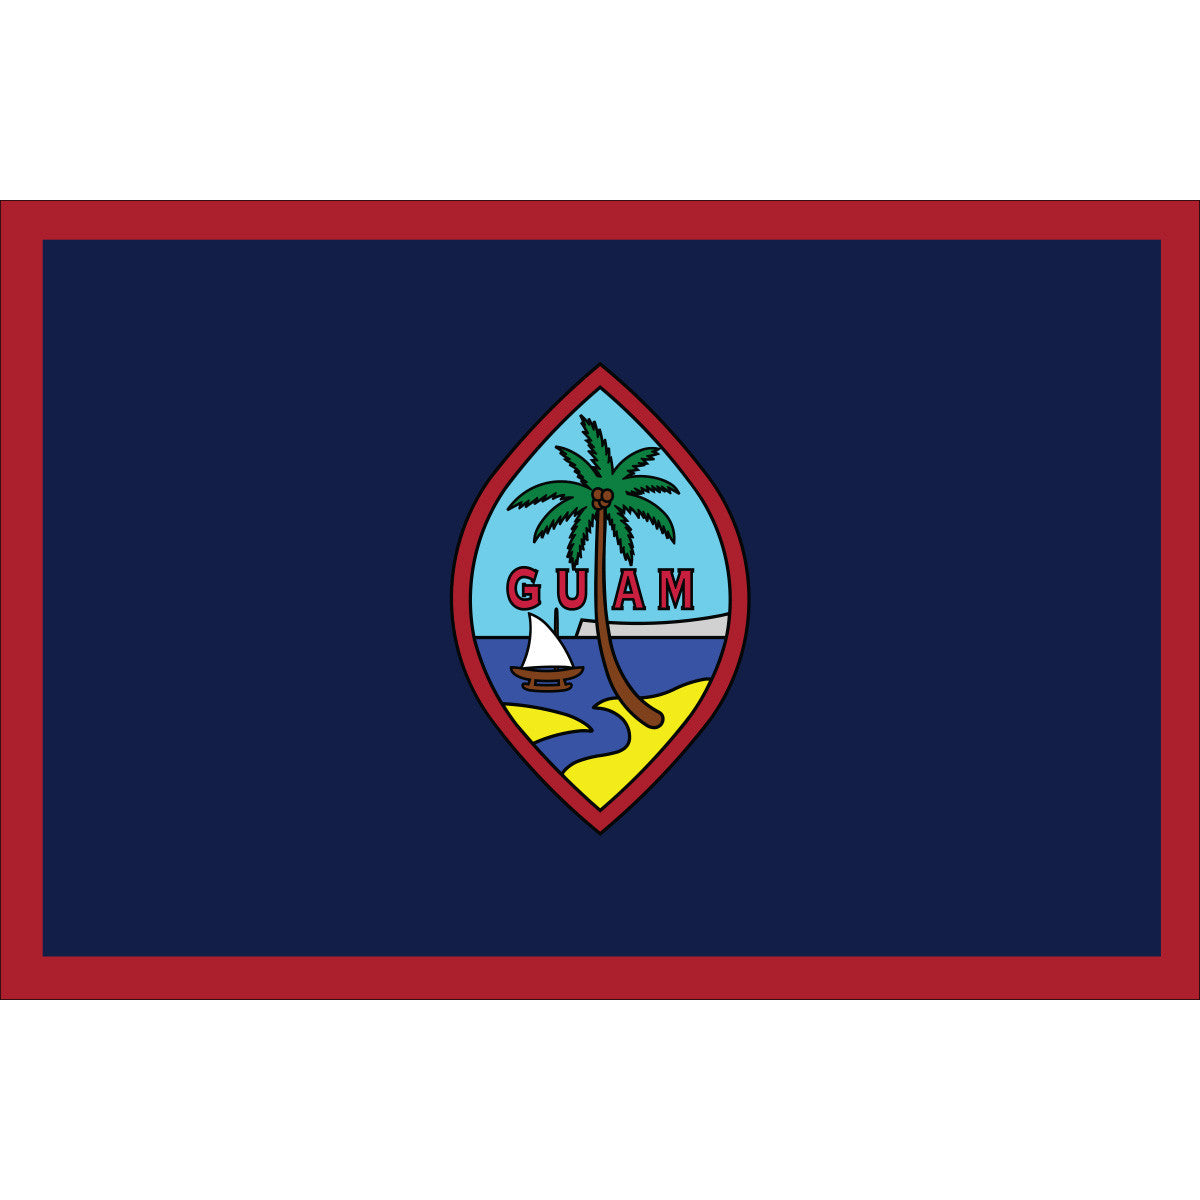 Guam Flag for Sale, The Flag of Guam